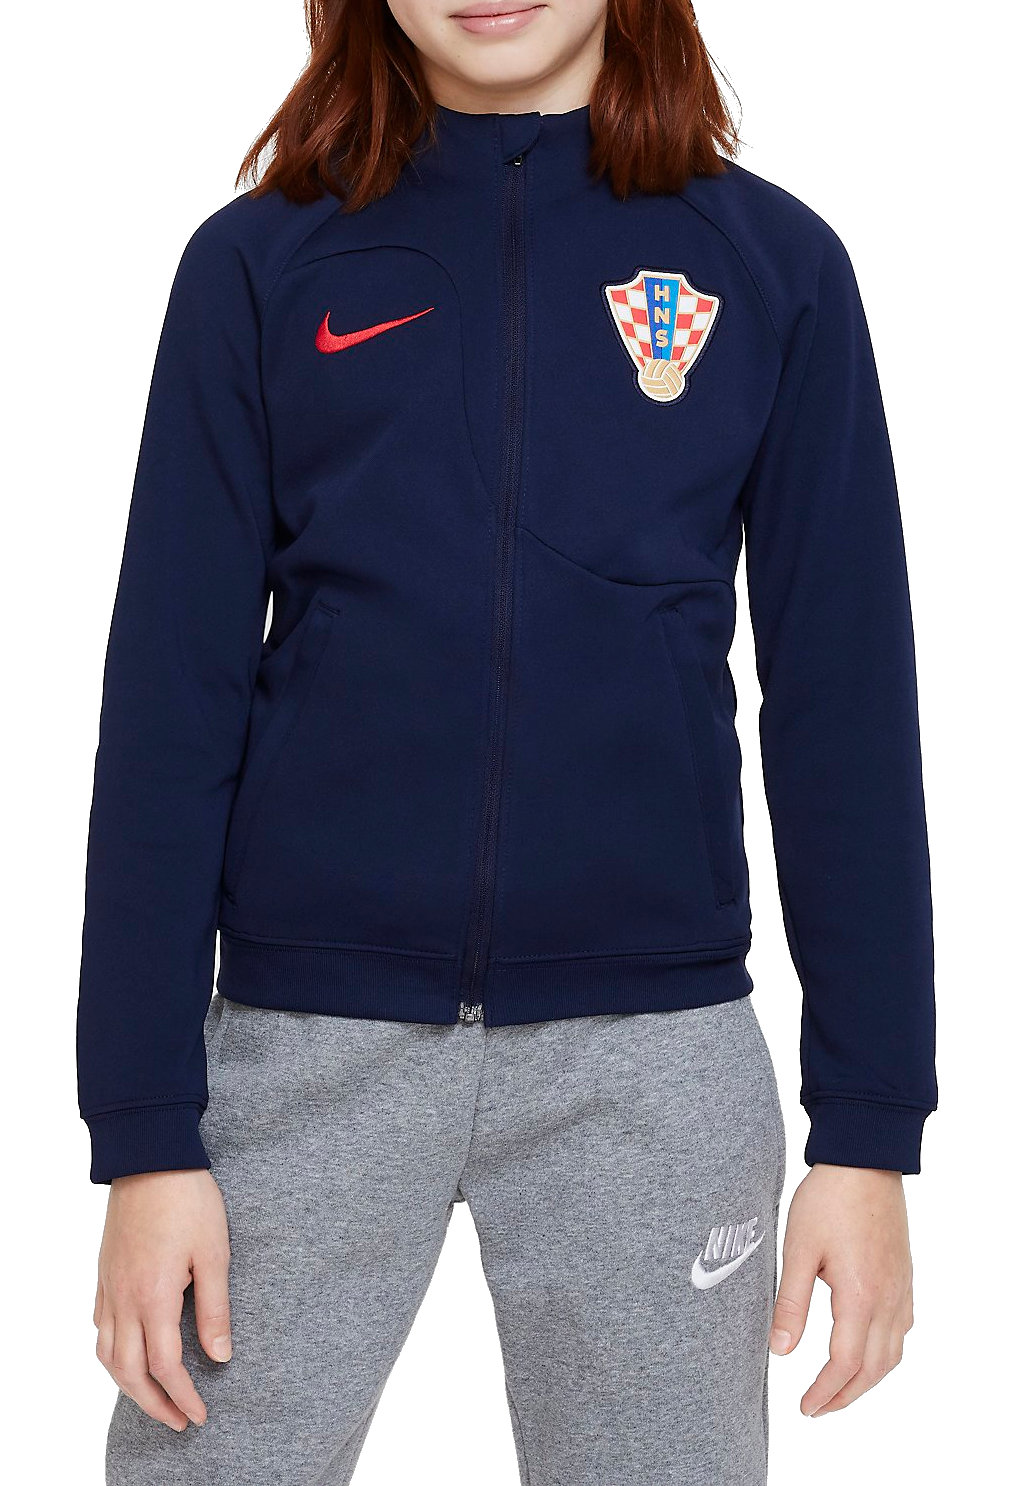 Jack Nike Croatia Academy Pro Prematch Jacket Big Kids